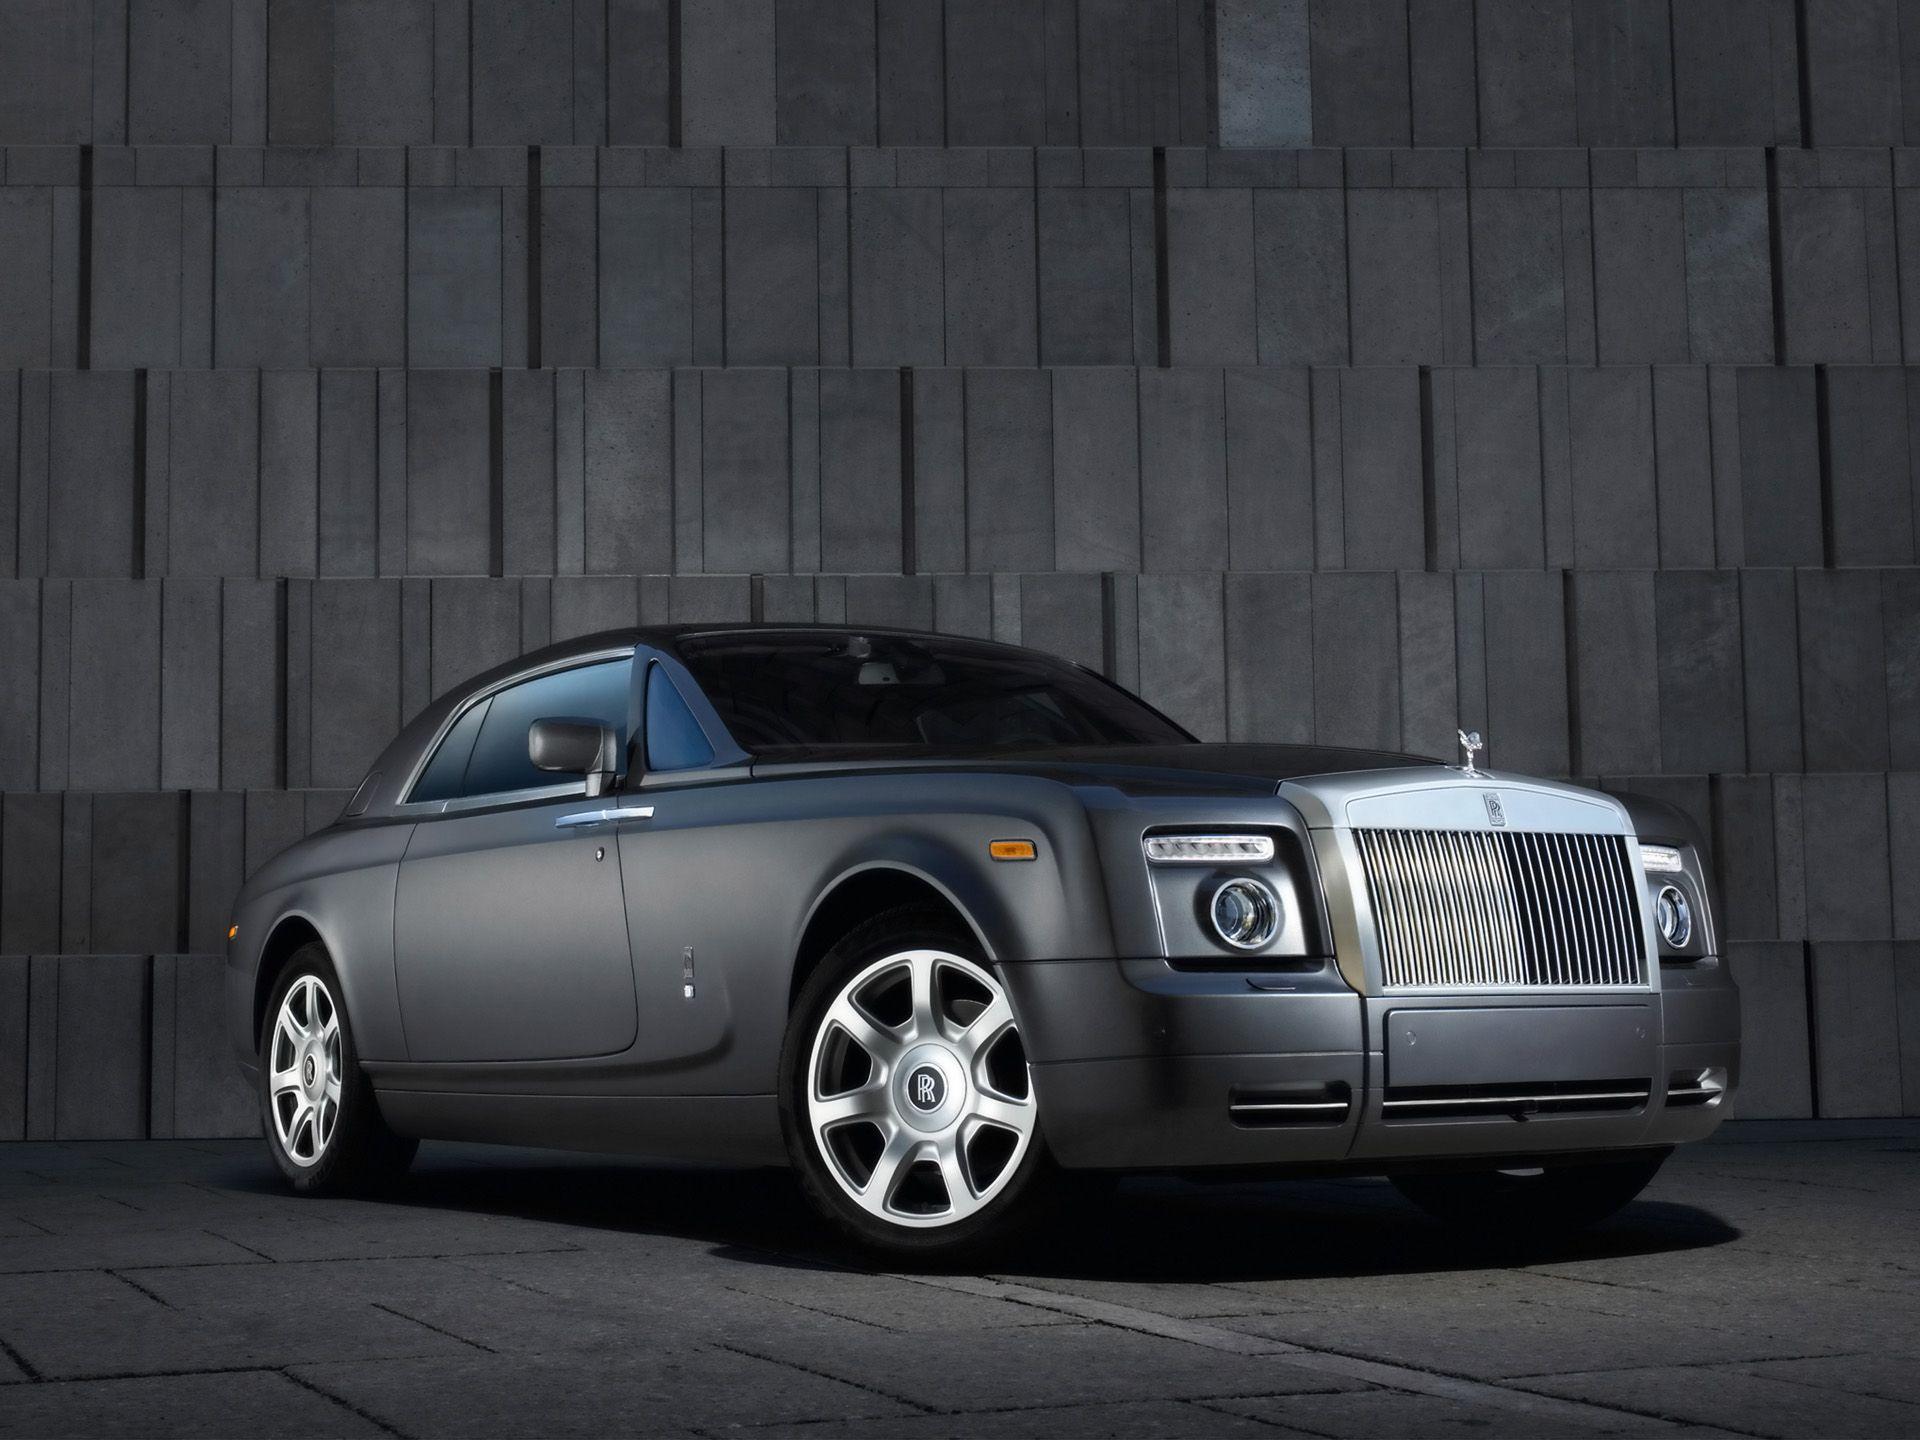 Rolls Royce Phantom Coupe. Cars & Bikes. Rolls royce